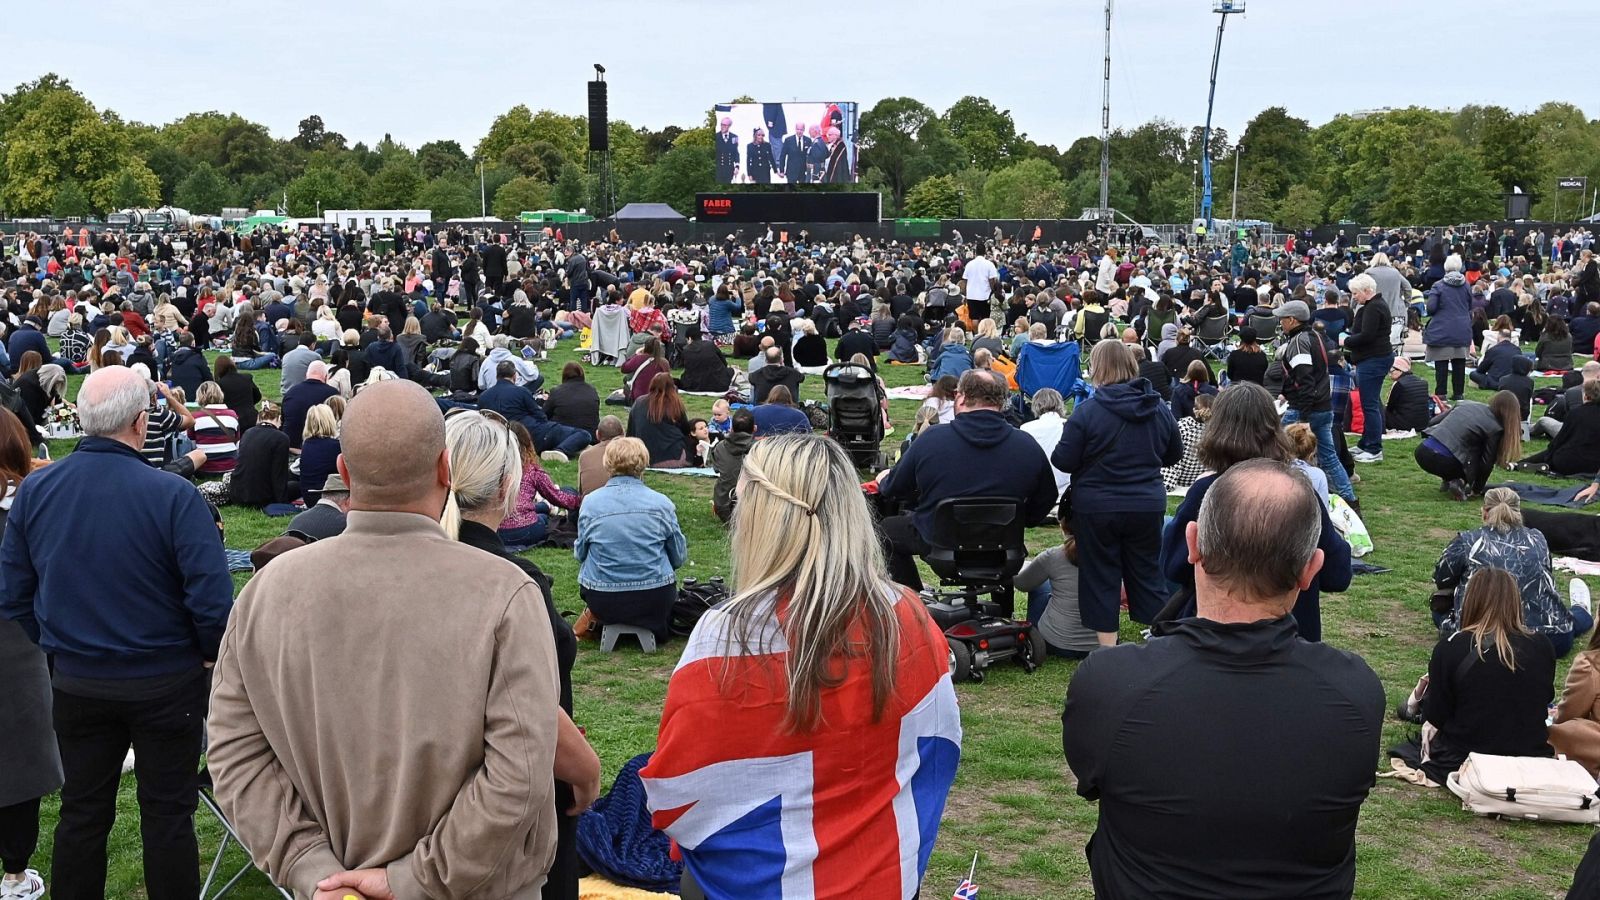 Asistentes observan el funeral de la reina Isabel II en una pantalla gigante en Hyde Park, Londres, el 19 de septiembre de 2022. Foto: JUSTIN TALLIS / AFP